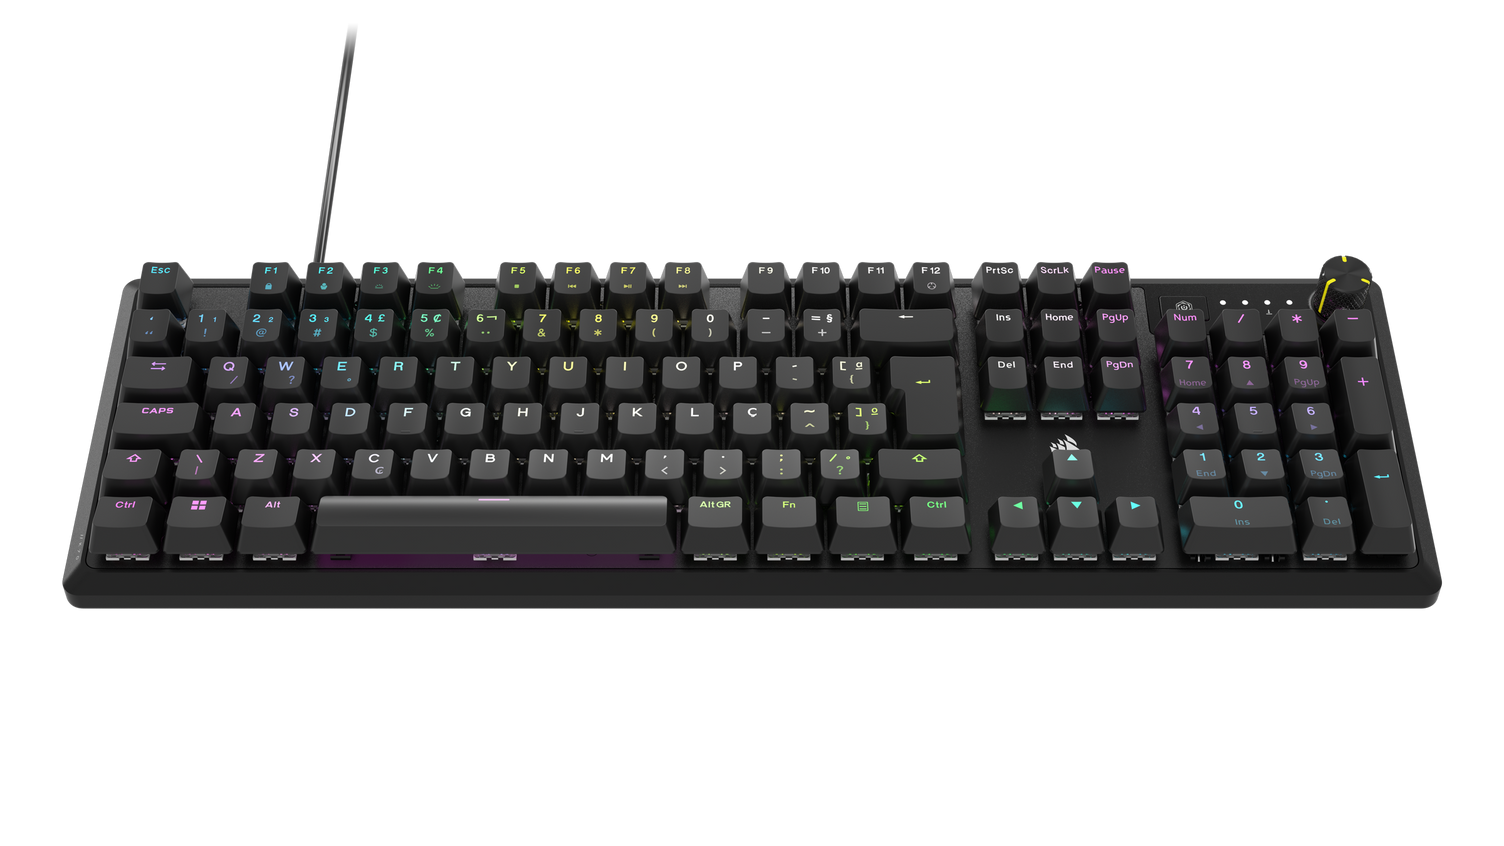 More information about "CORSAIR K70 CORE RGB Mechanical Gaming Keyboard"